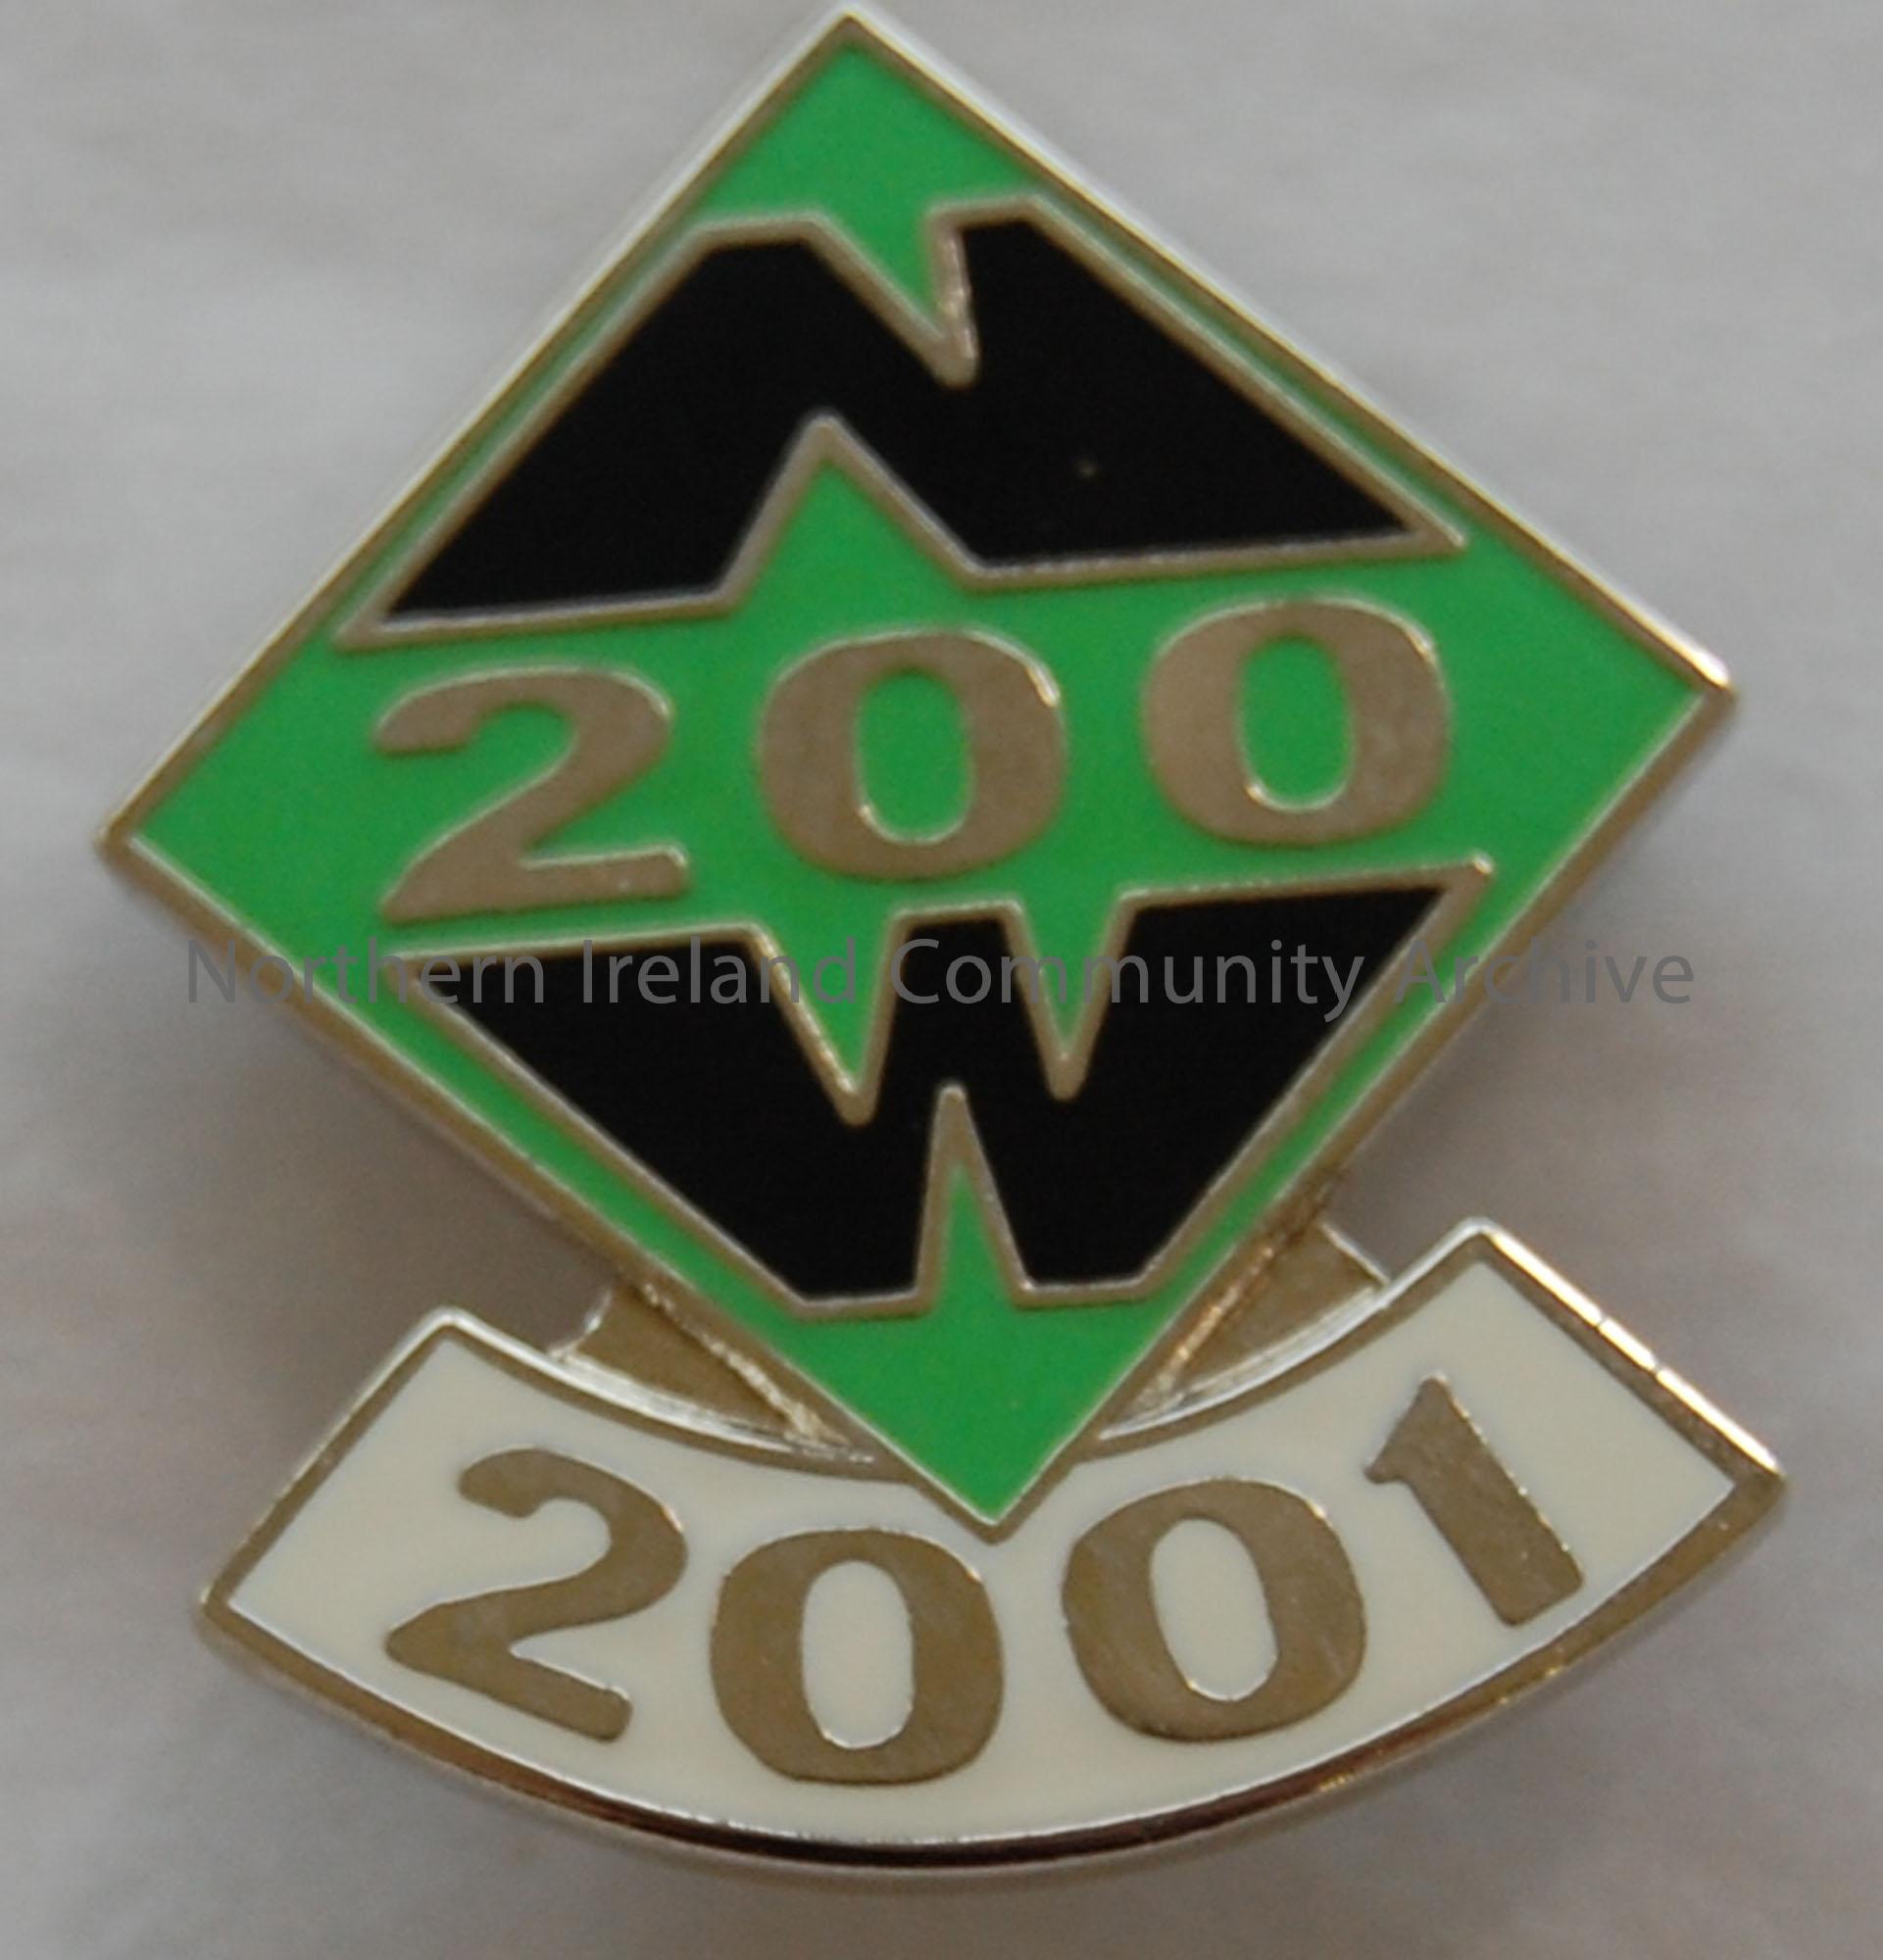 North West 200 badge, 2001